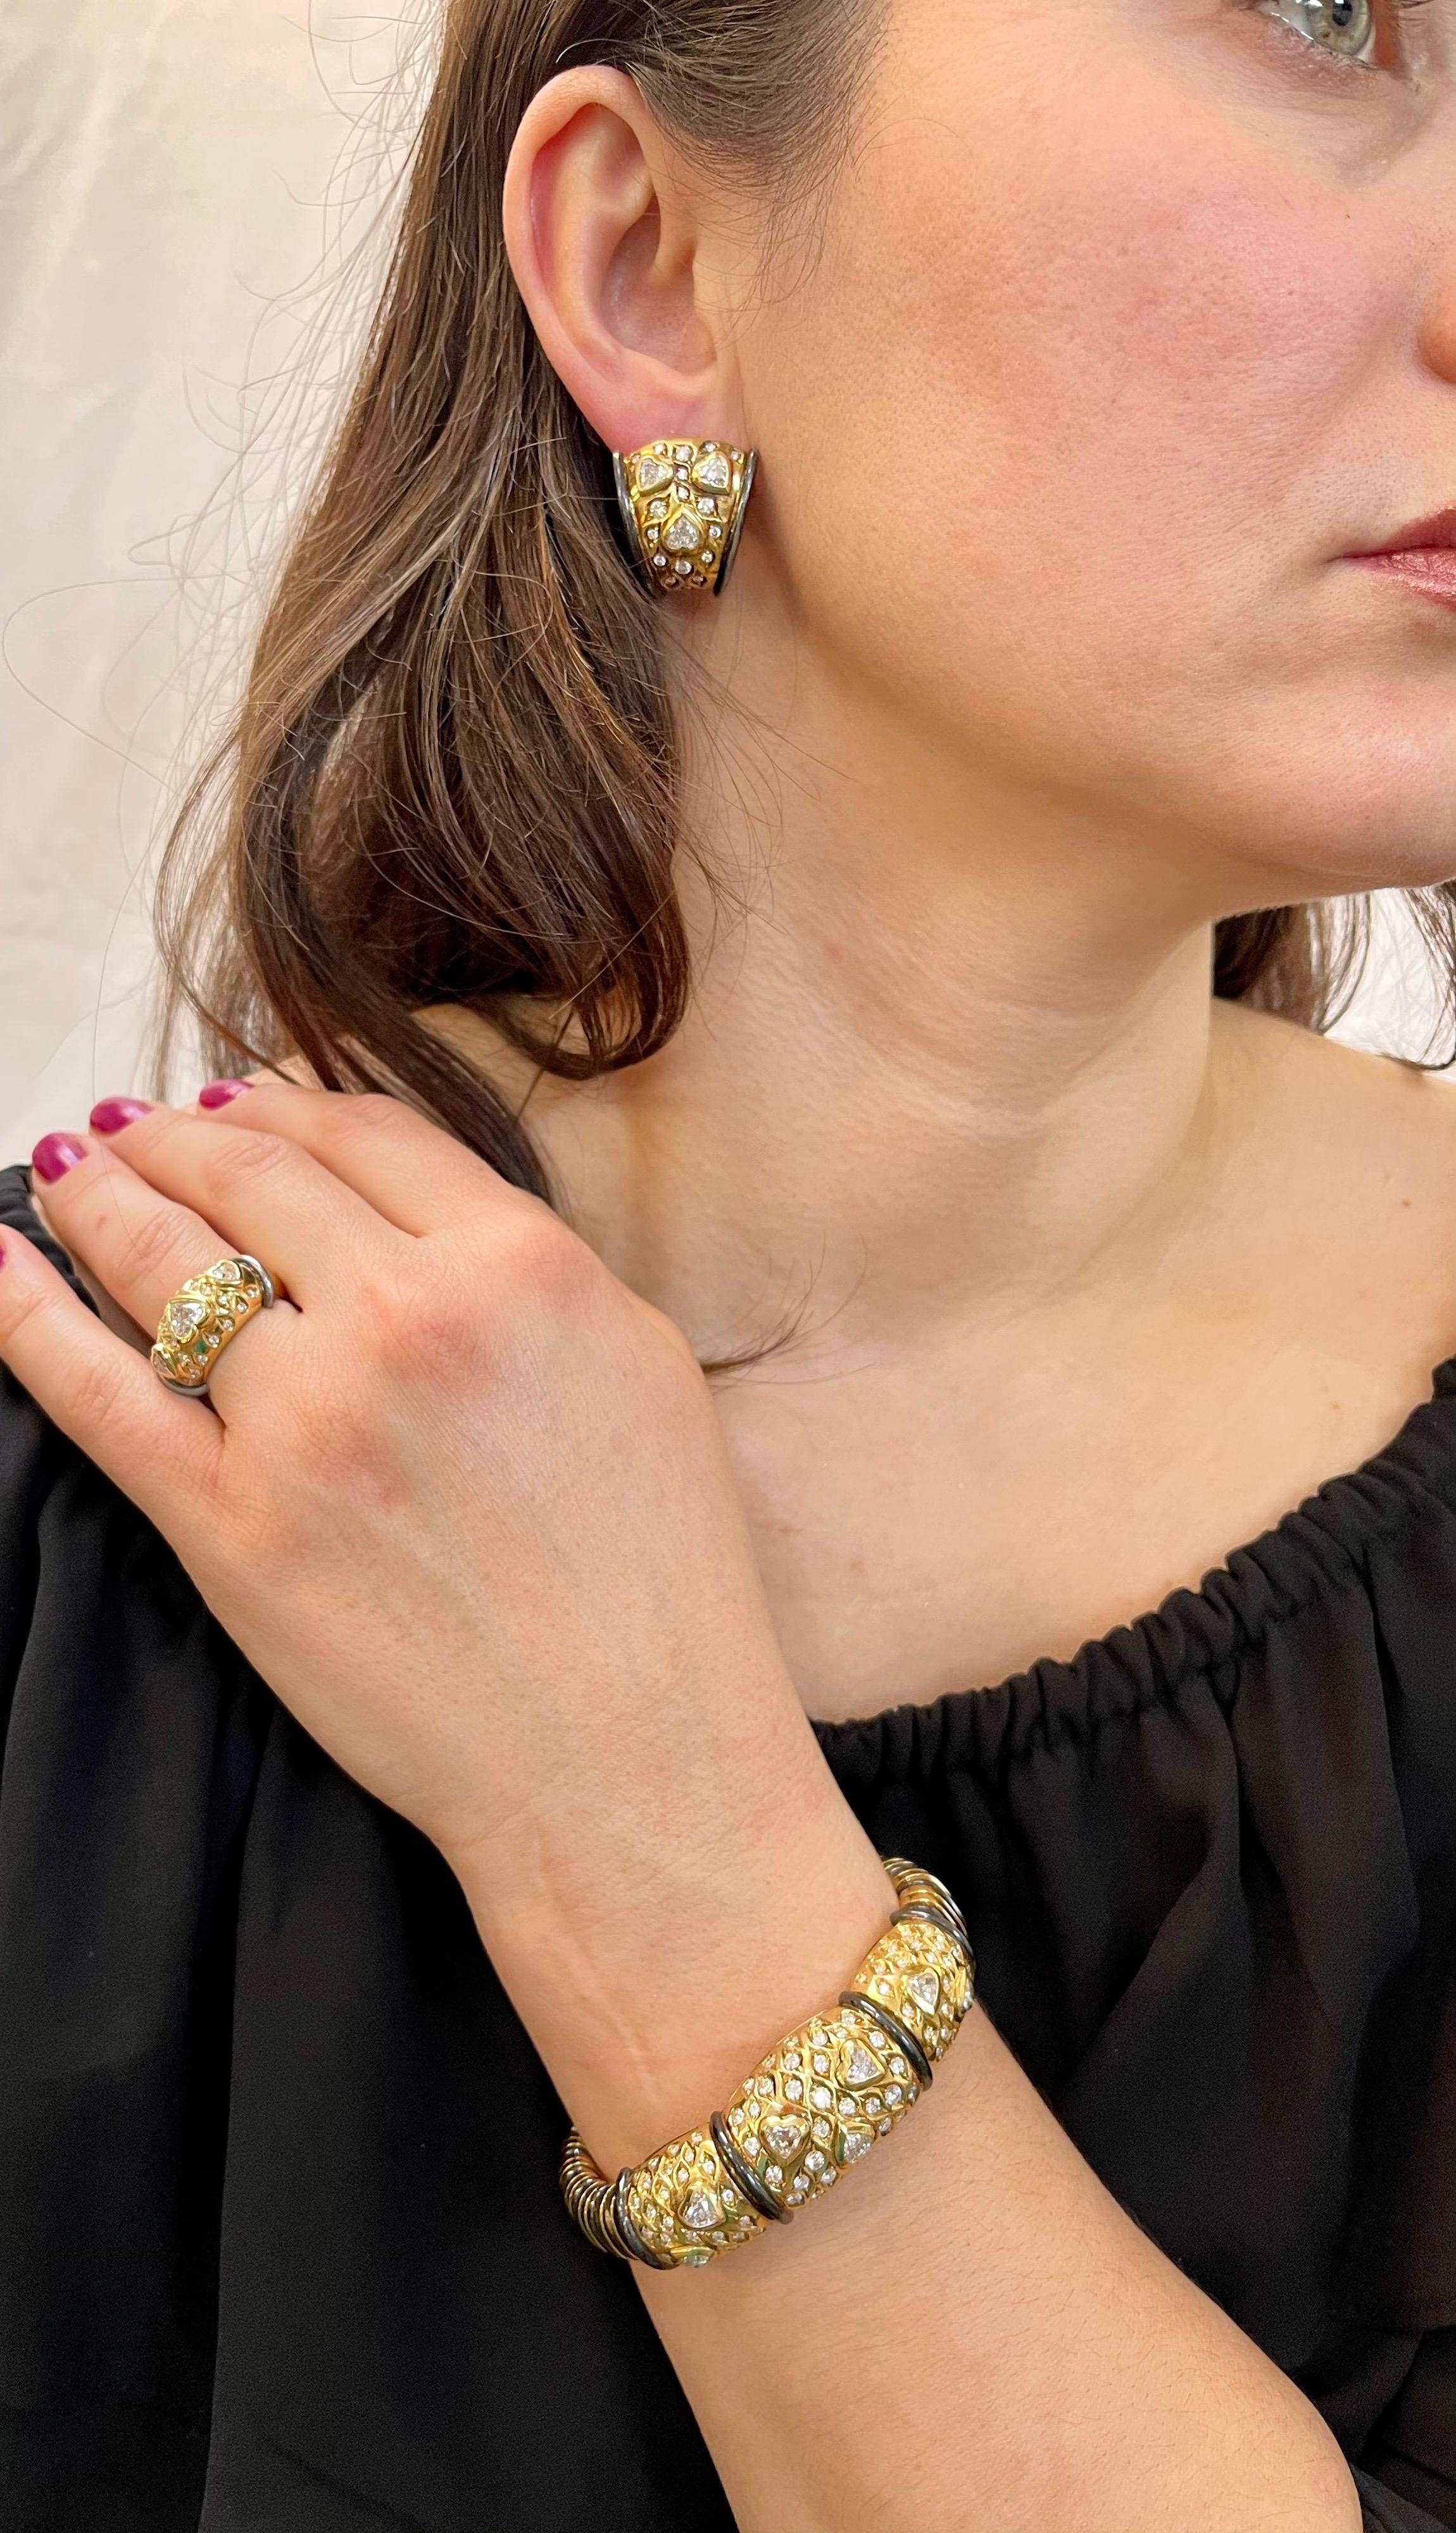 Leporttie Diamond Bangle Ring Earring Three-Piece Set in 18 Karat Yellow Gold For Sale 9